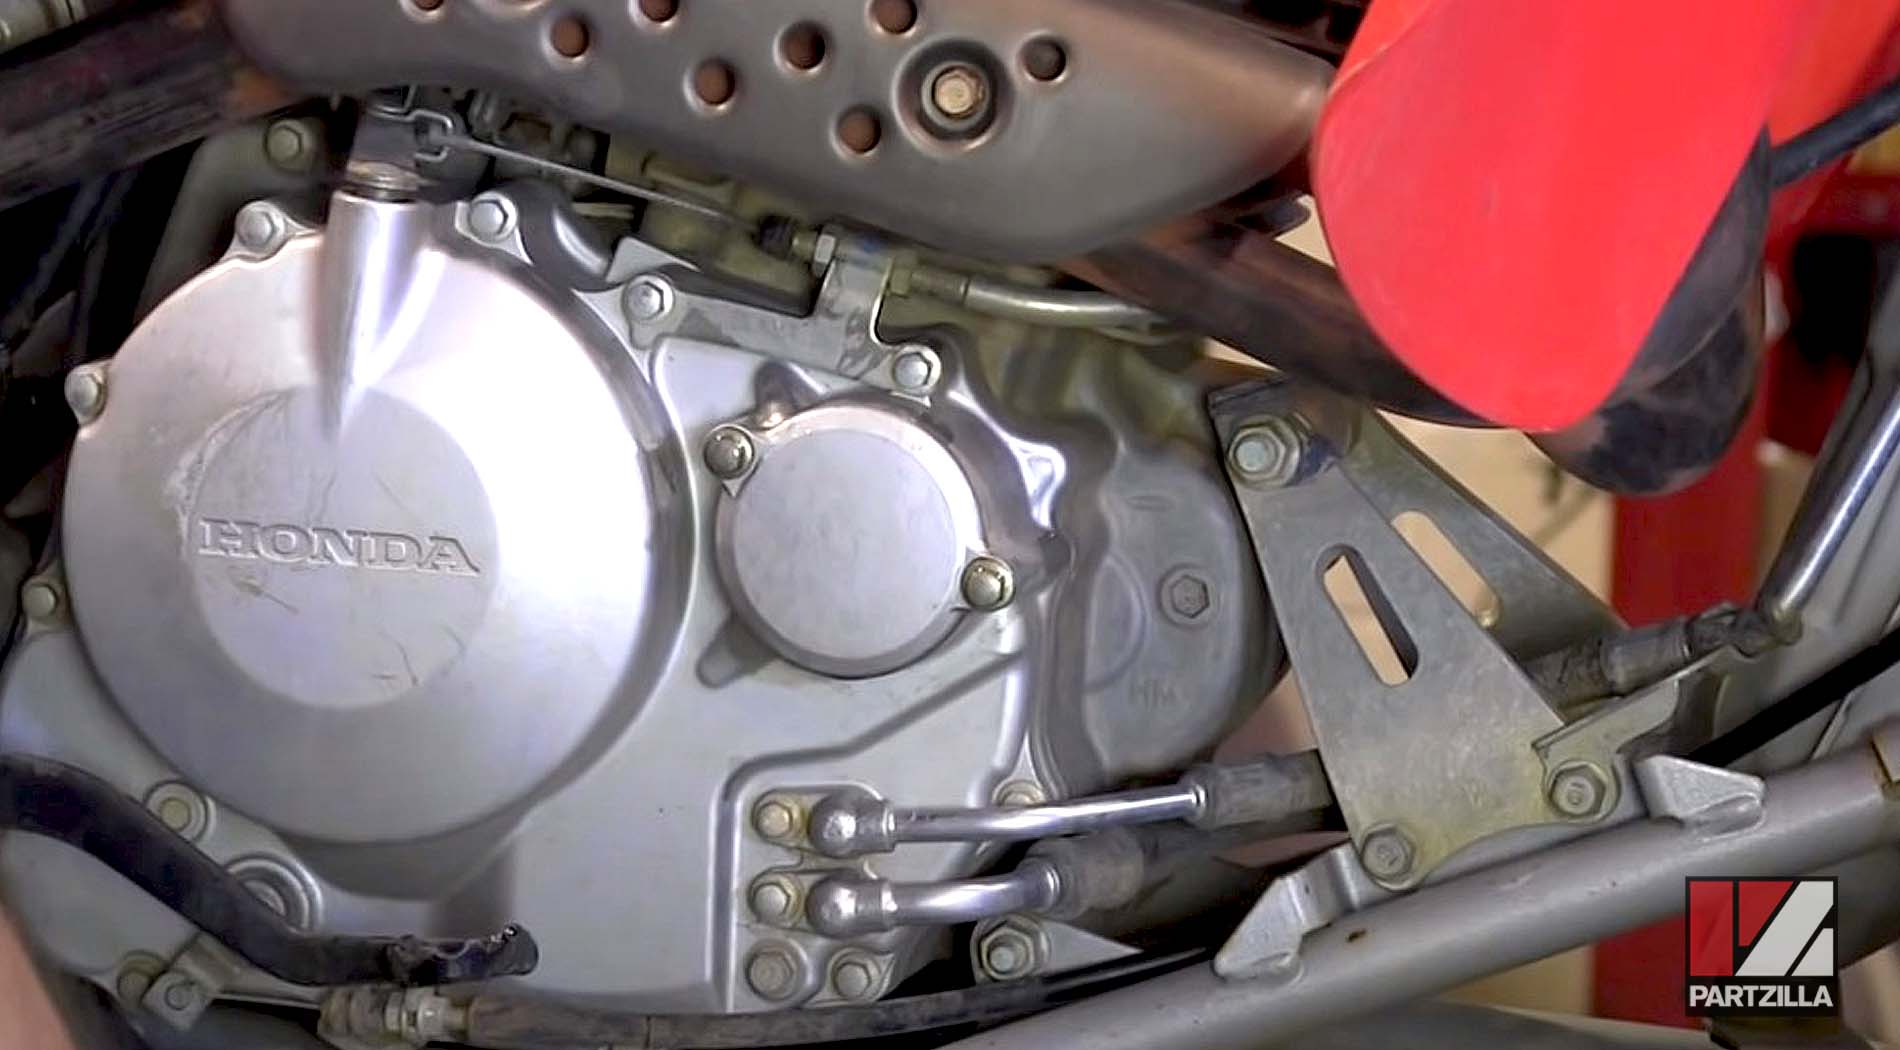 Honda ATV engine oil change service